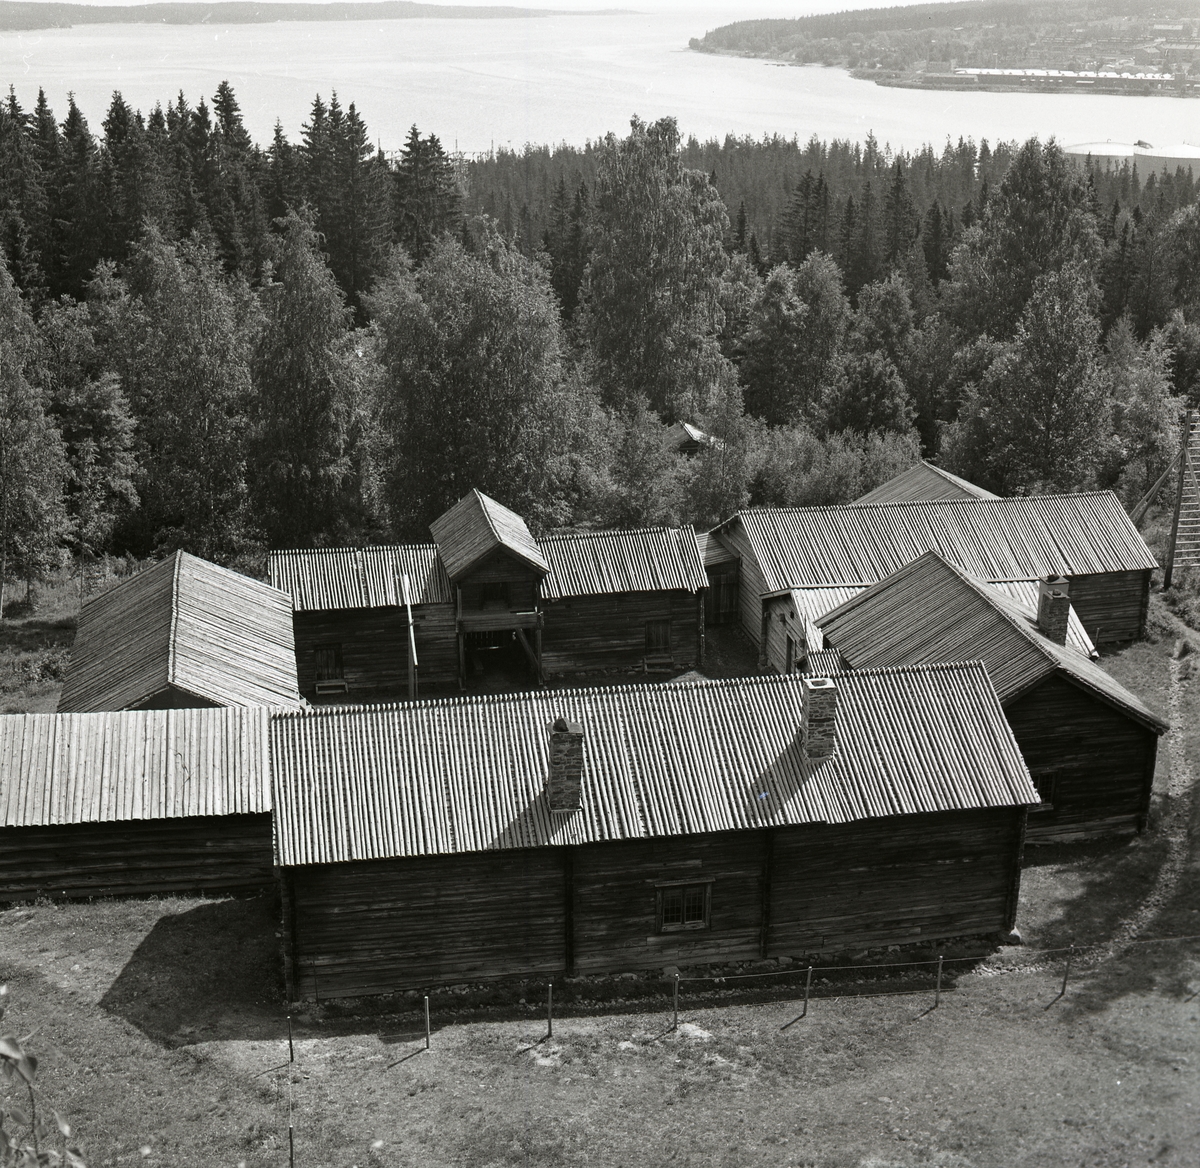 Ångermanlandsgården på Friluftsmuseet vid Murberget i Härnösand, 1974.